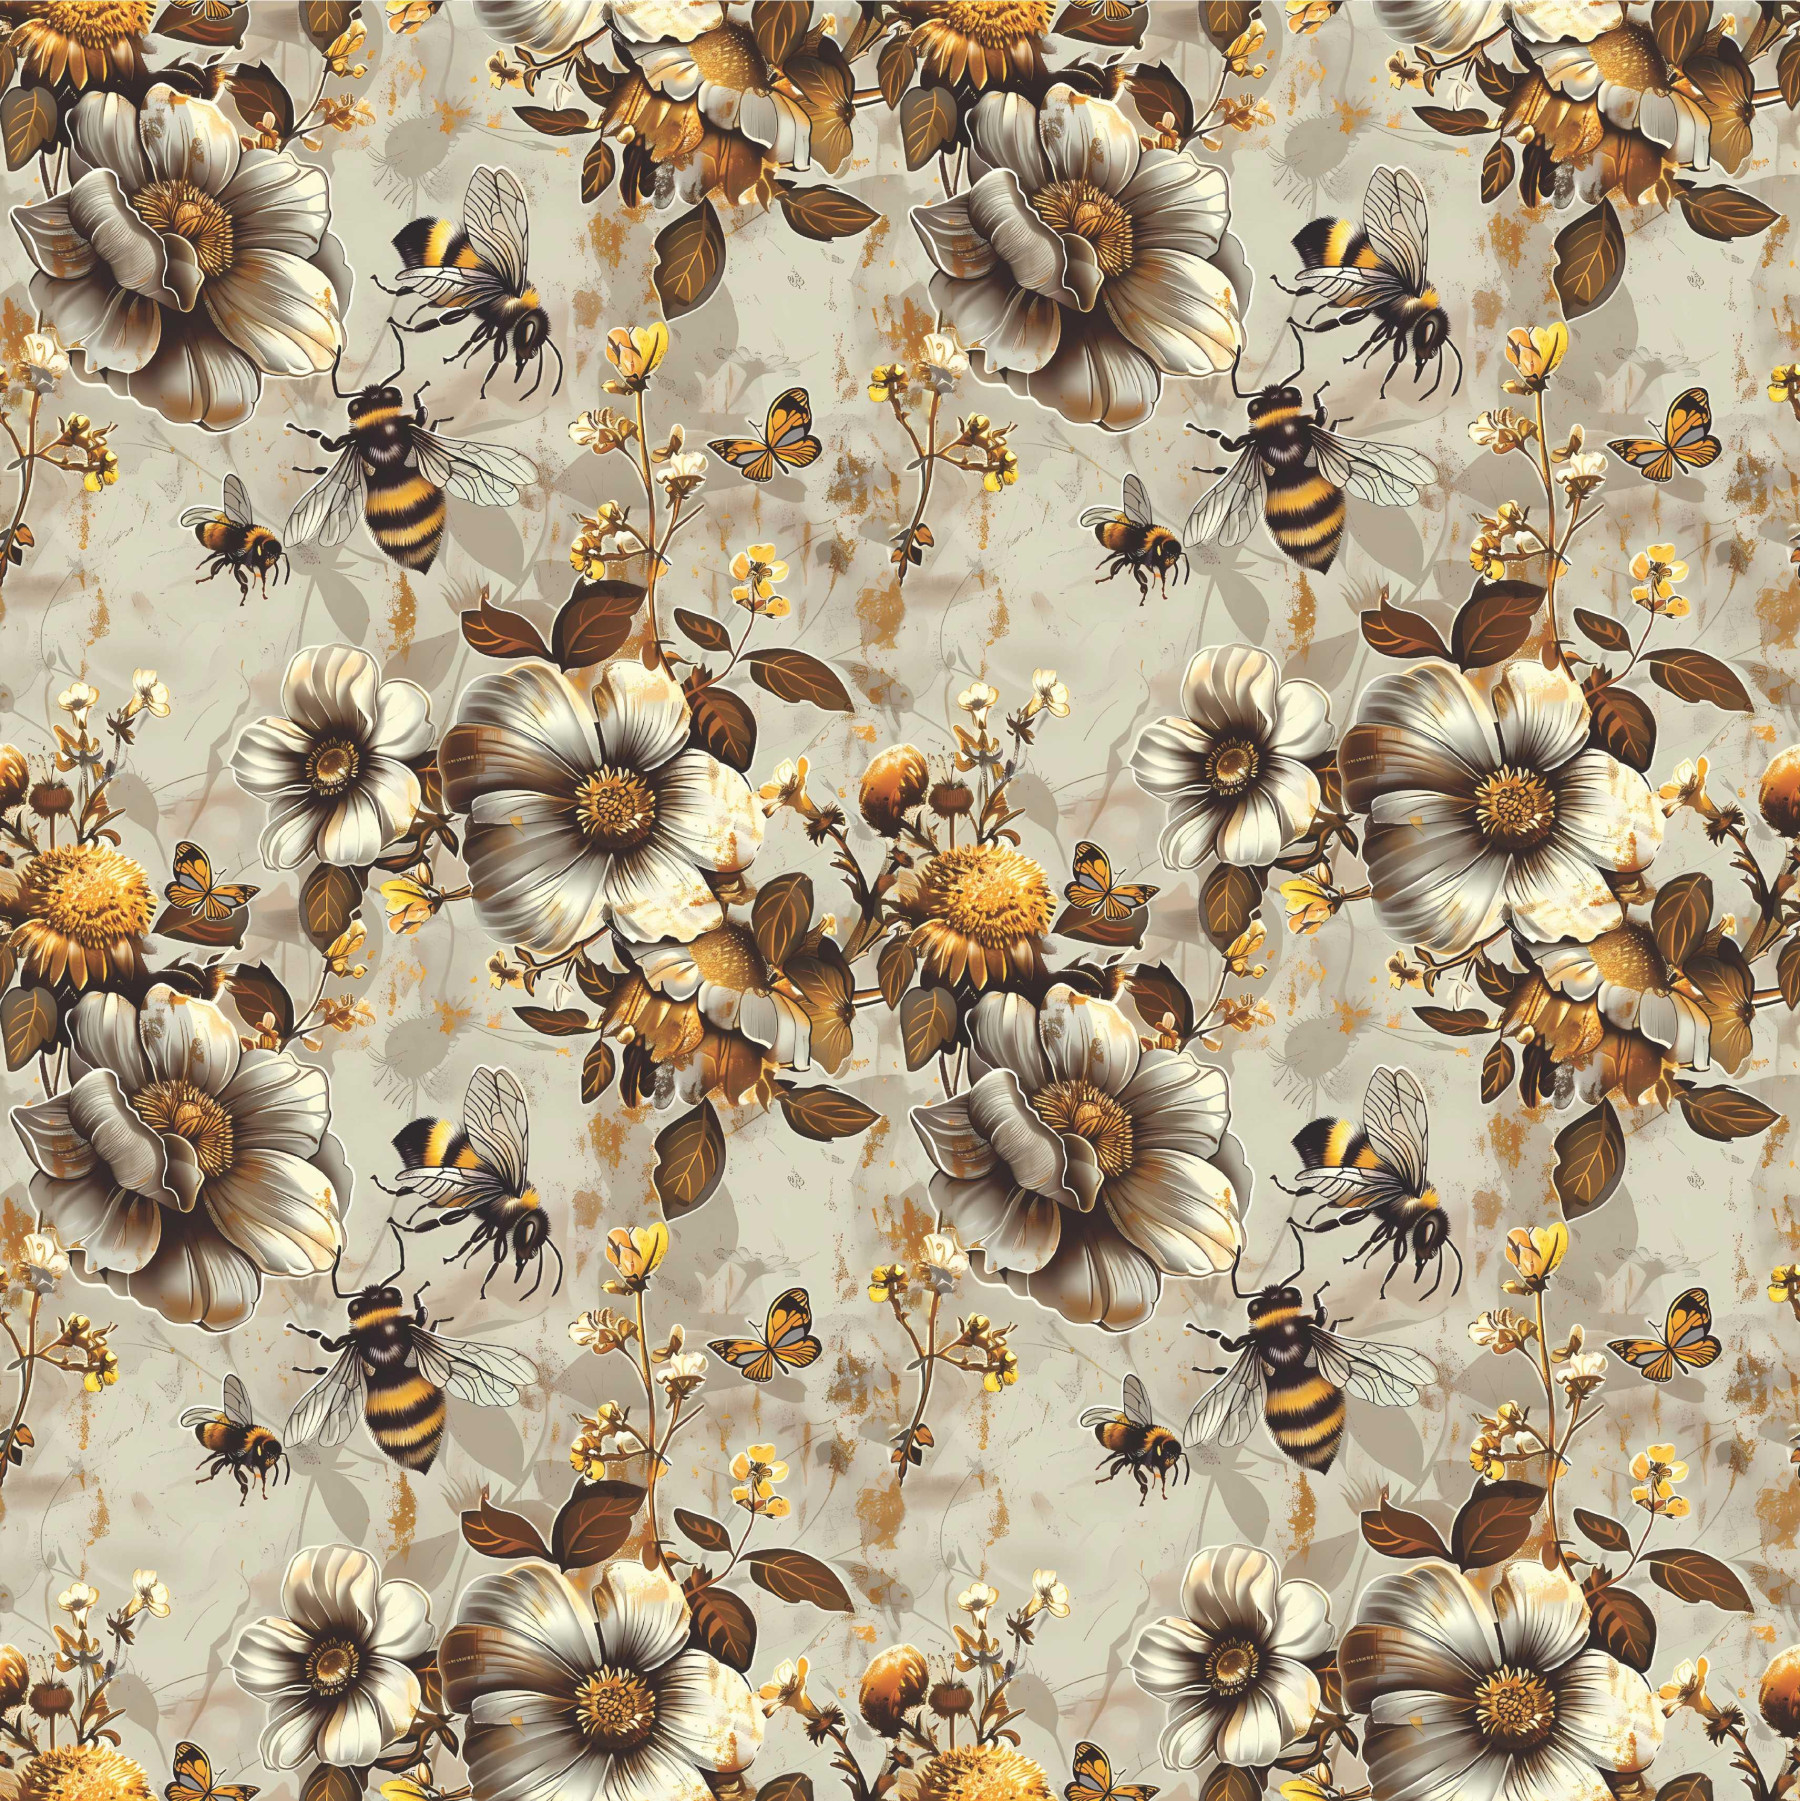 BEES & FLOWERS- Polster- Velours